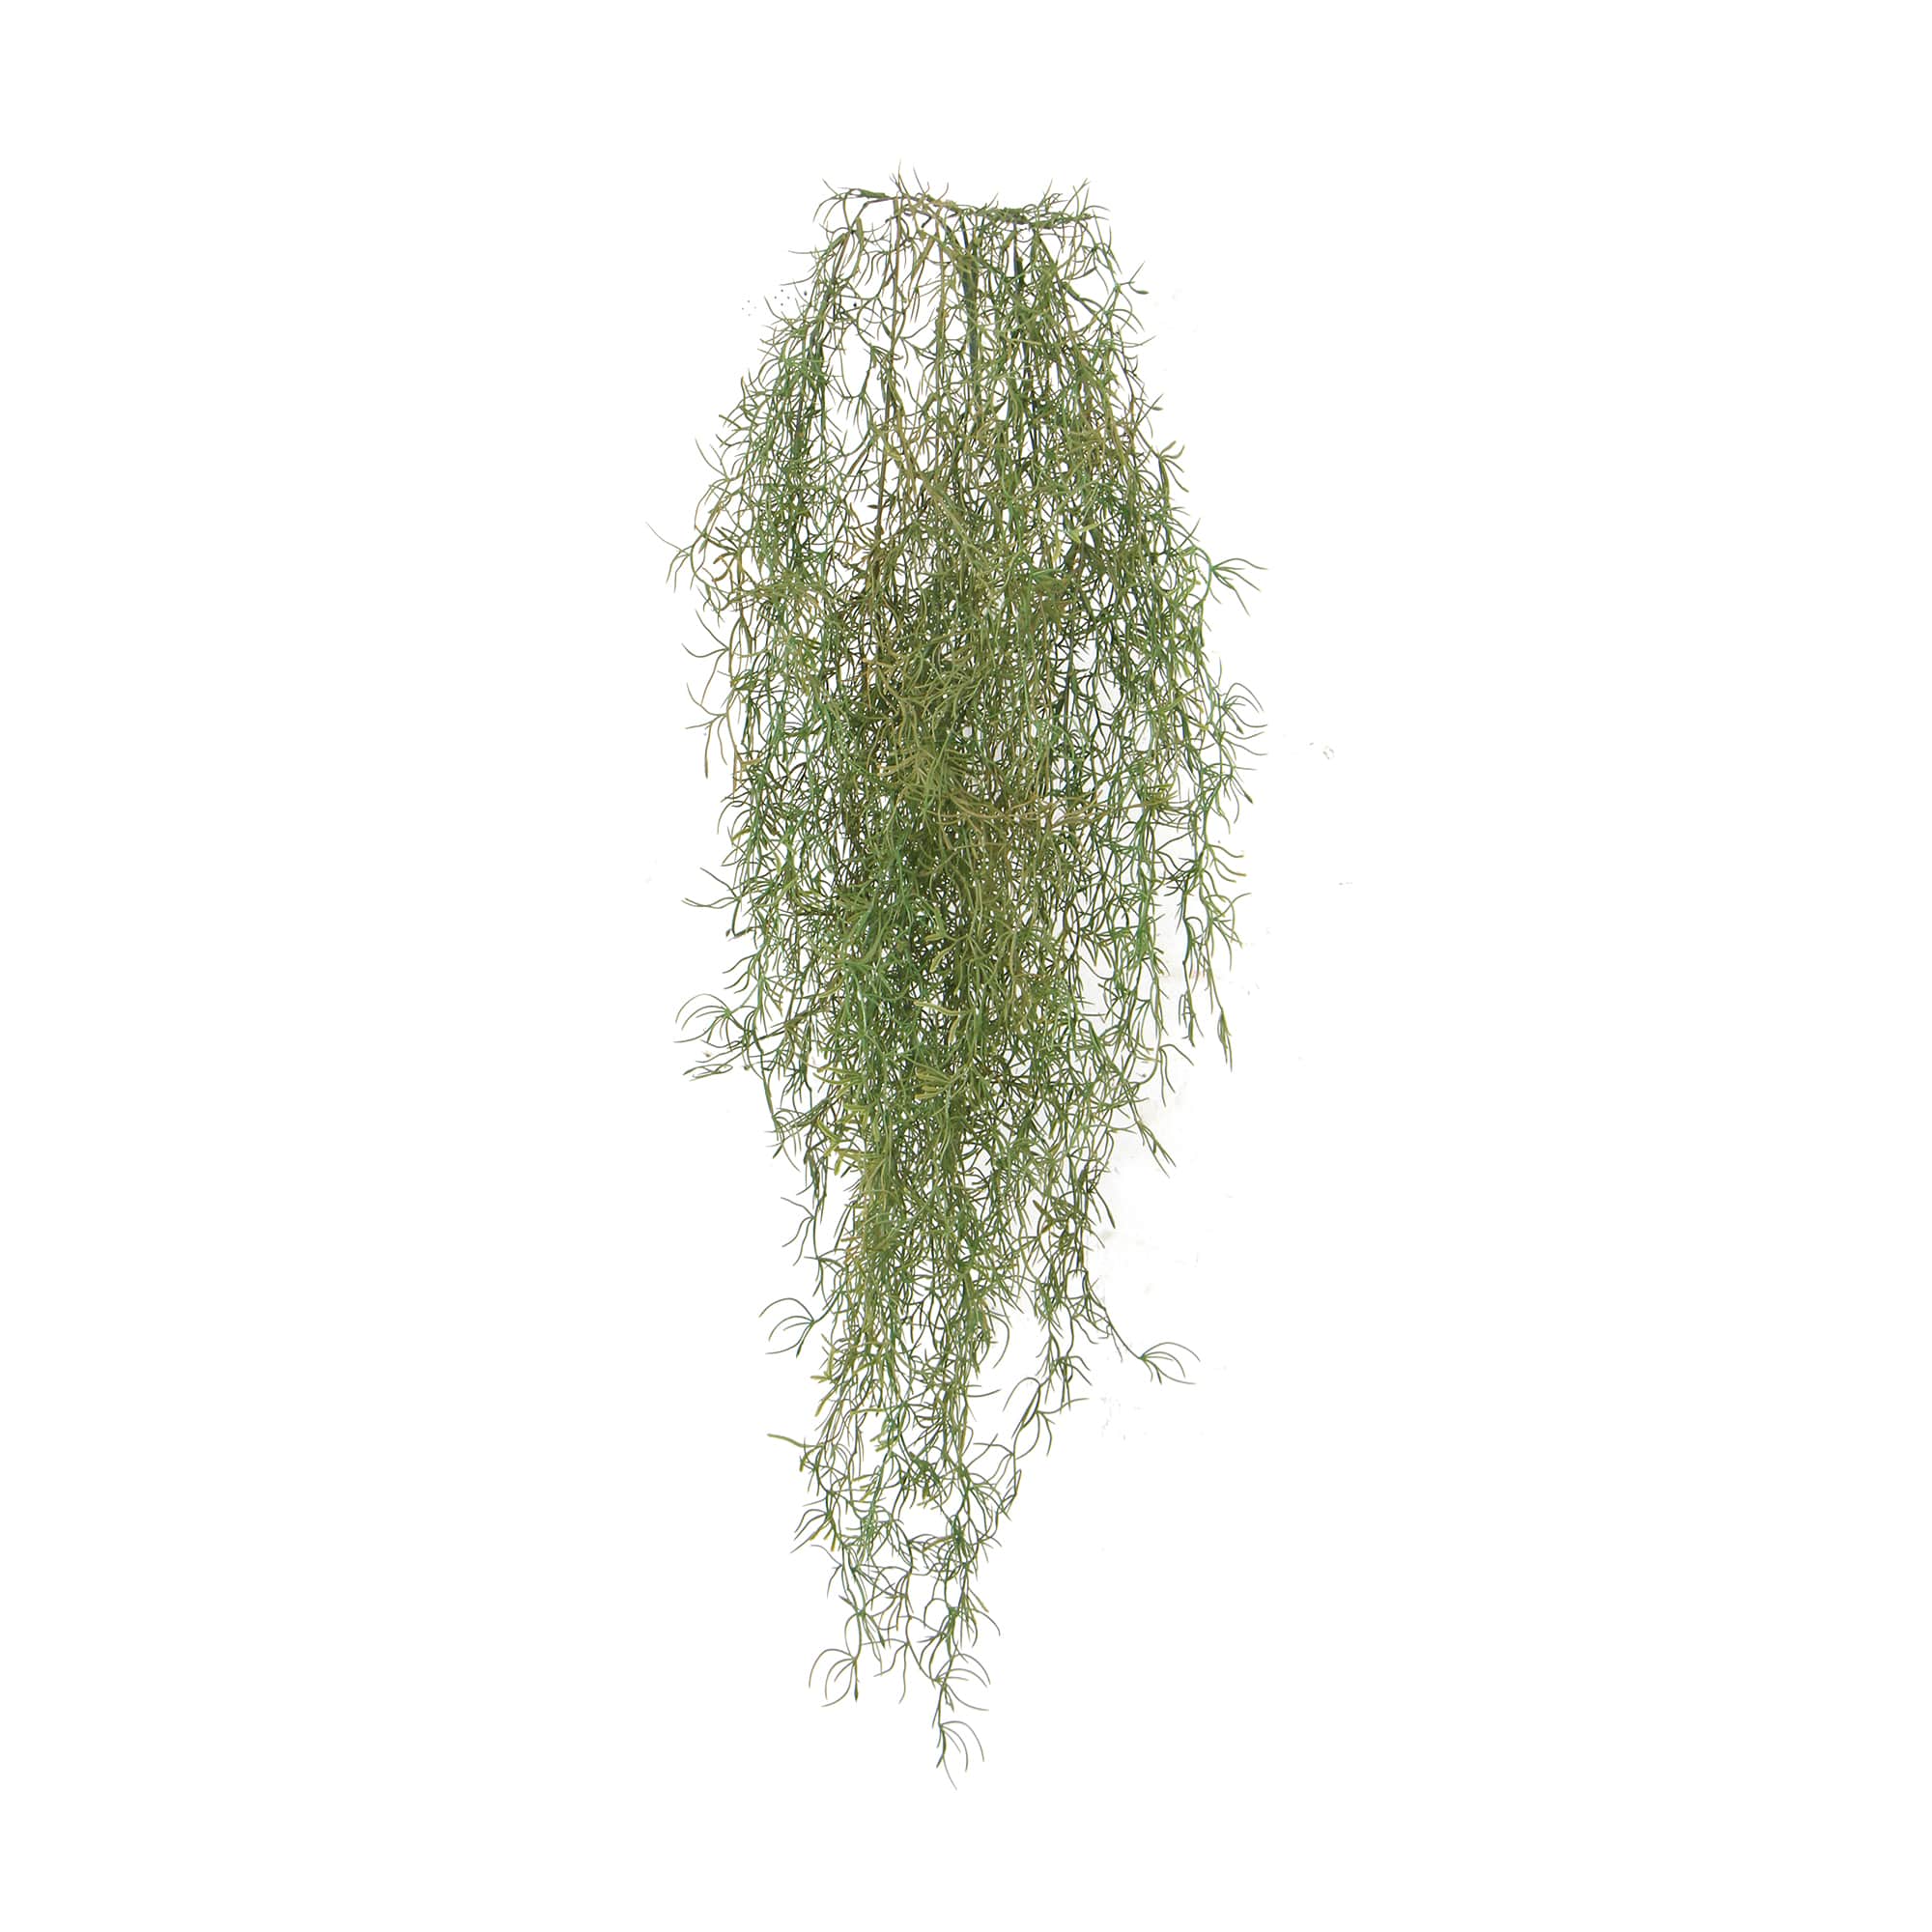 Artificial Air Plant Spanish Moss UV Resistant 100cm - Designer Vertical Gardens fake plant stem hanging fern